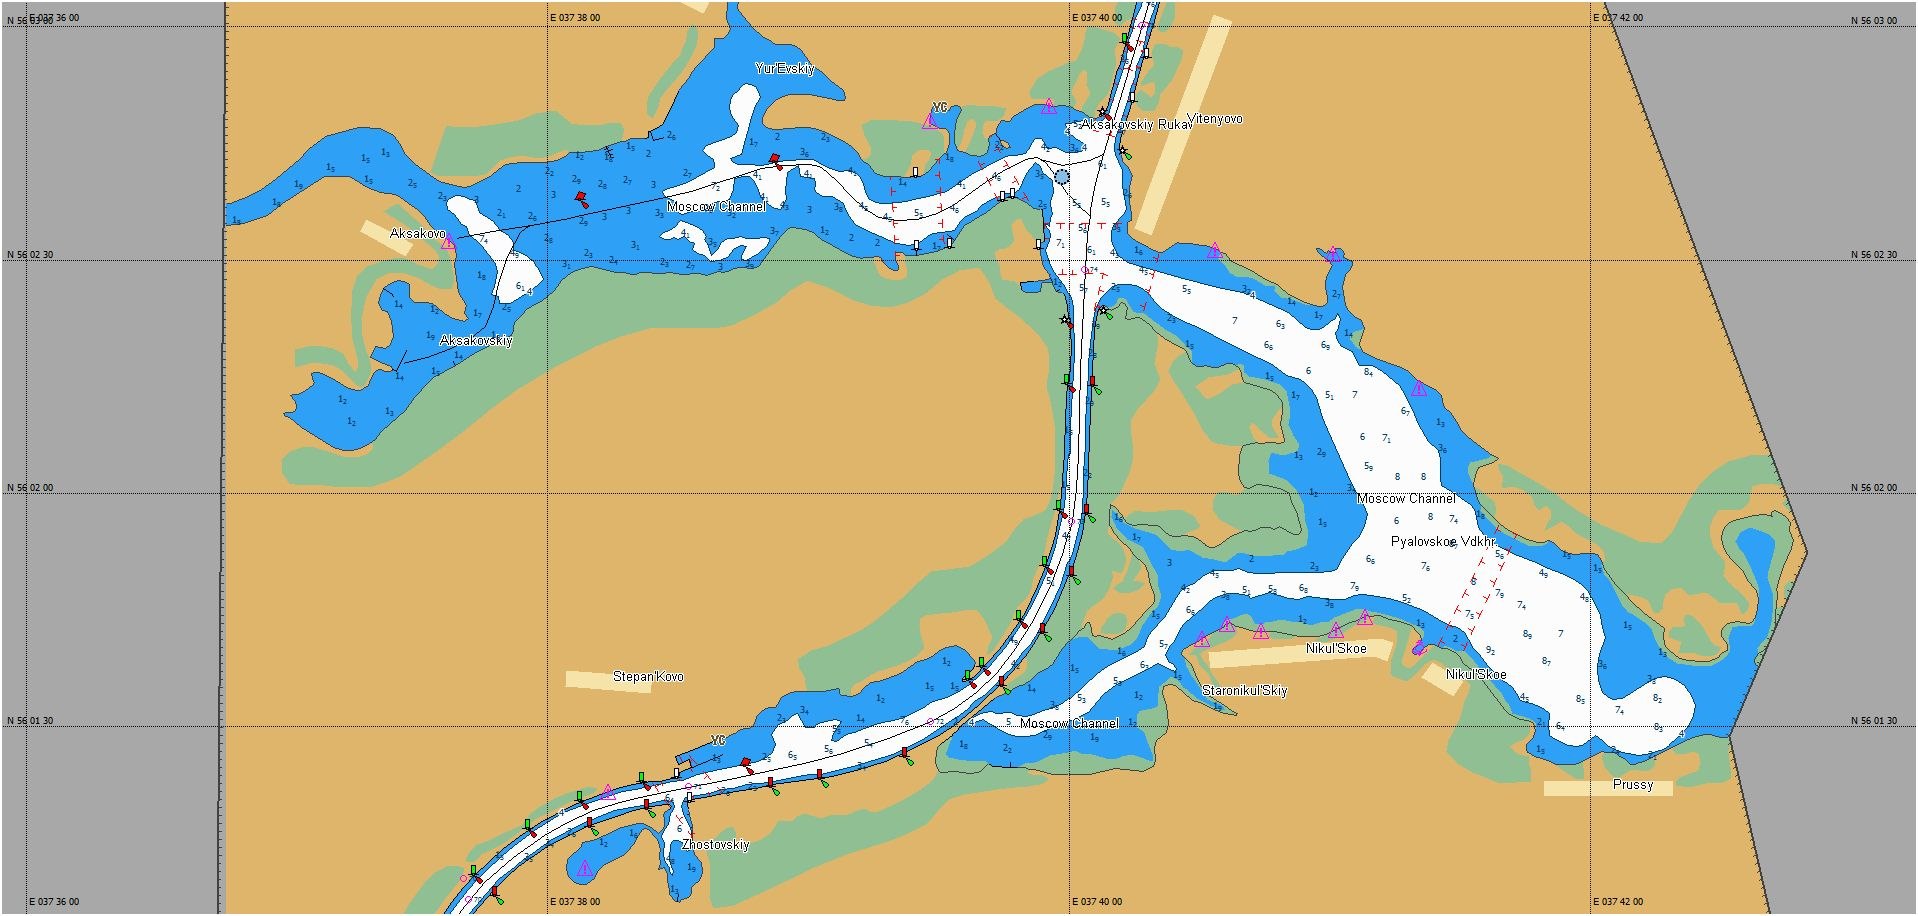 Водохранилища лоция. Карта глубин пяловского водохранилища. Карта глубин c-Map Max-n RS-n224. Пяловское водохранилище карта глубин. Карта глубин пяловского водохранилища с глубинами.